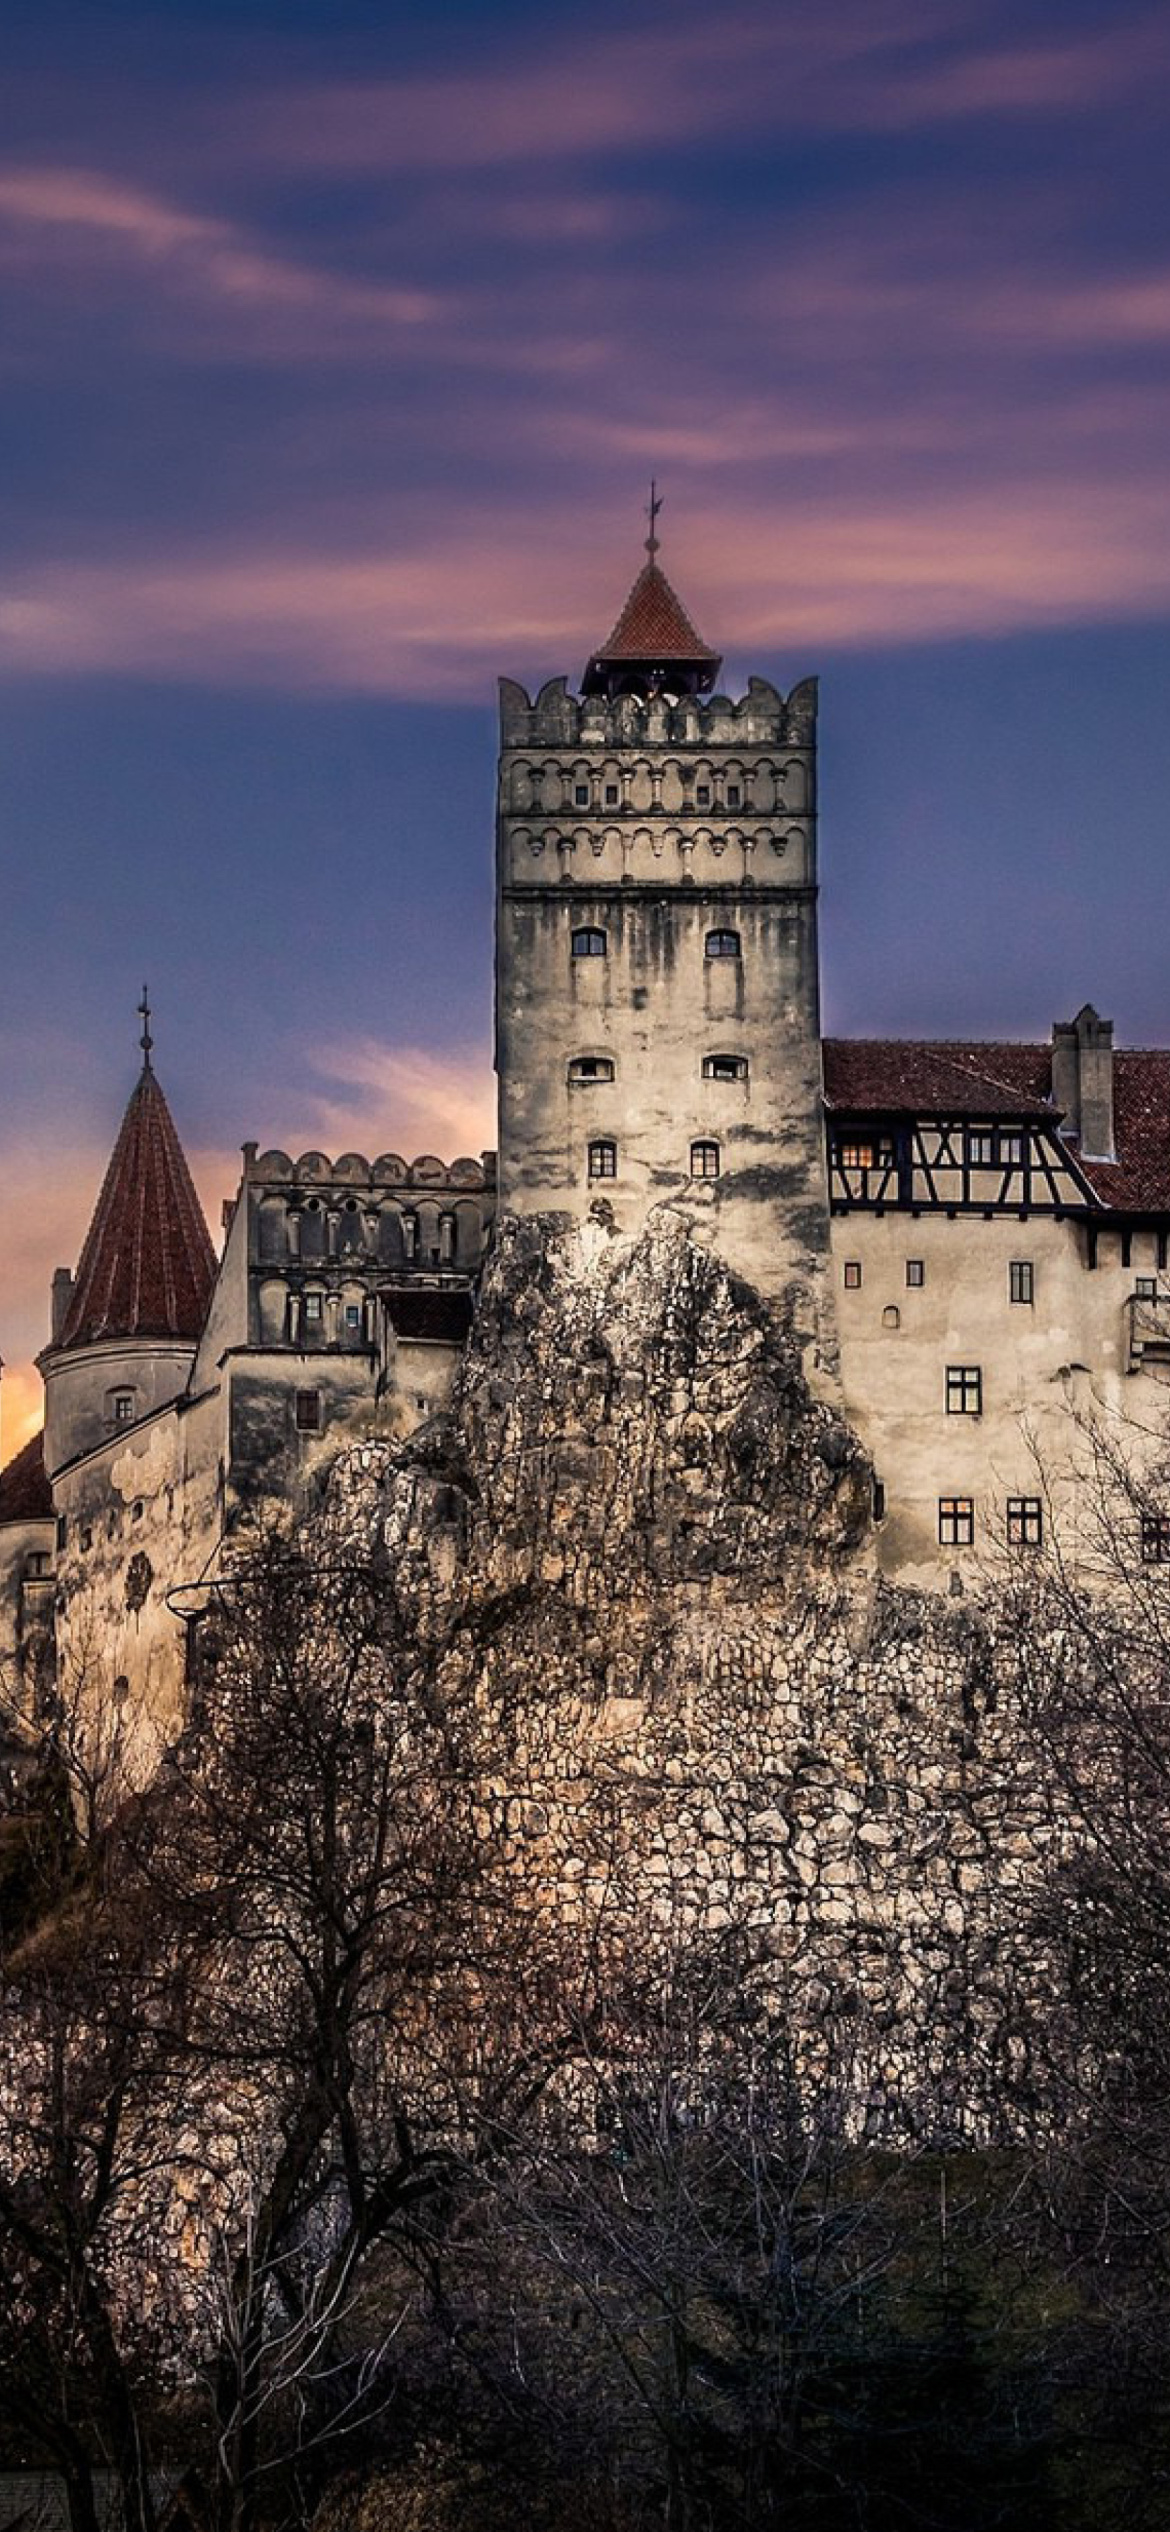 Bran Castle in Romania Wallpaper for iPhone 11